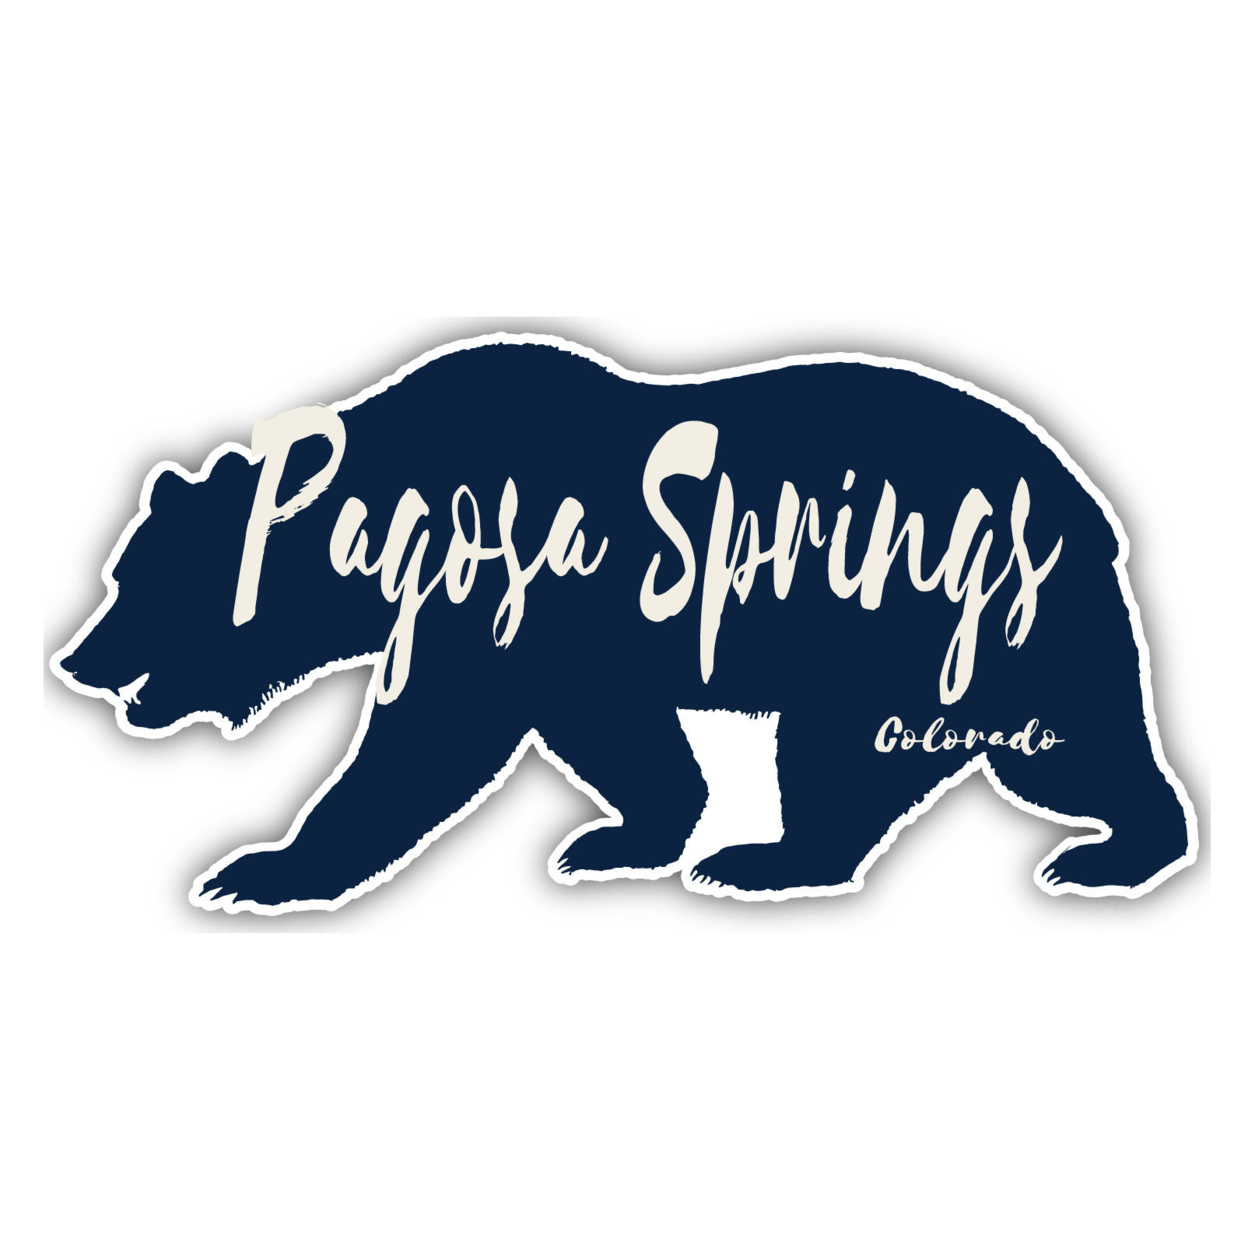 Pagosa Springs Colorado Souvenir Decorative Stickers (Choose Theme And Size) - Single Unit, 4-Inch, Bear